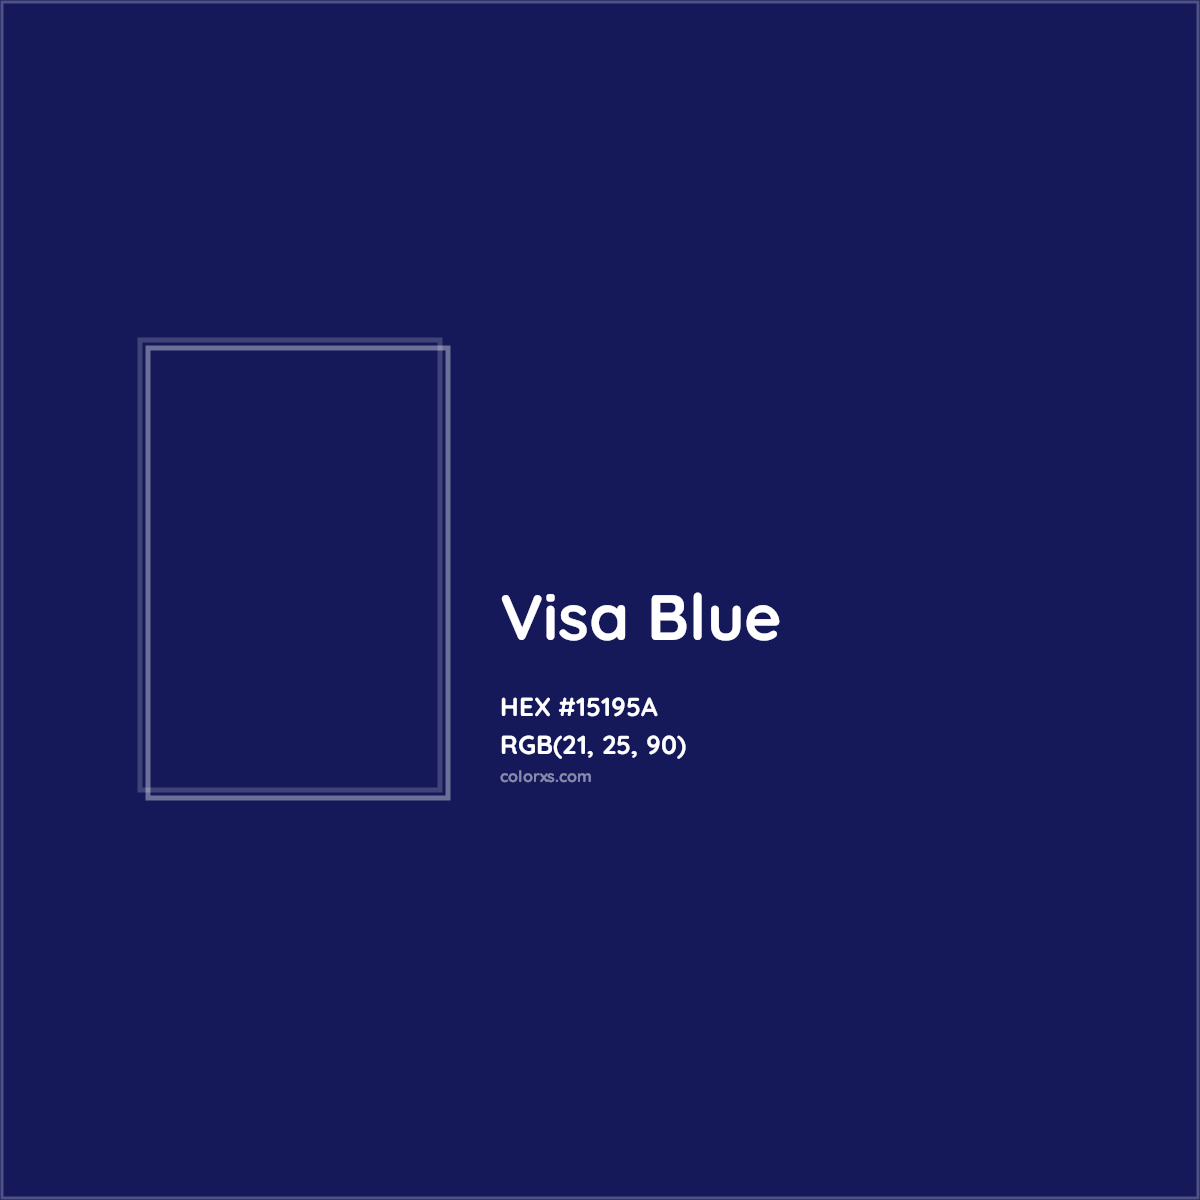 HEX #15195A Visa Blue Other Brand - Color Code